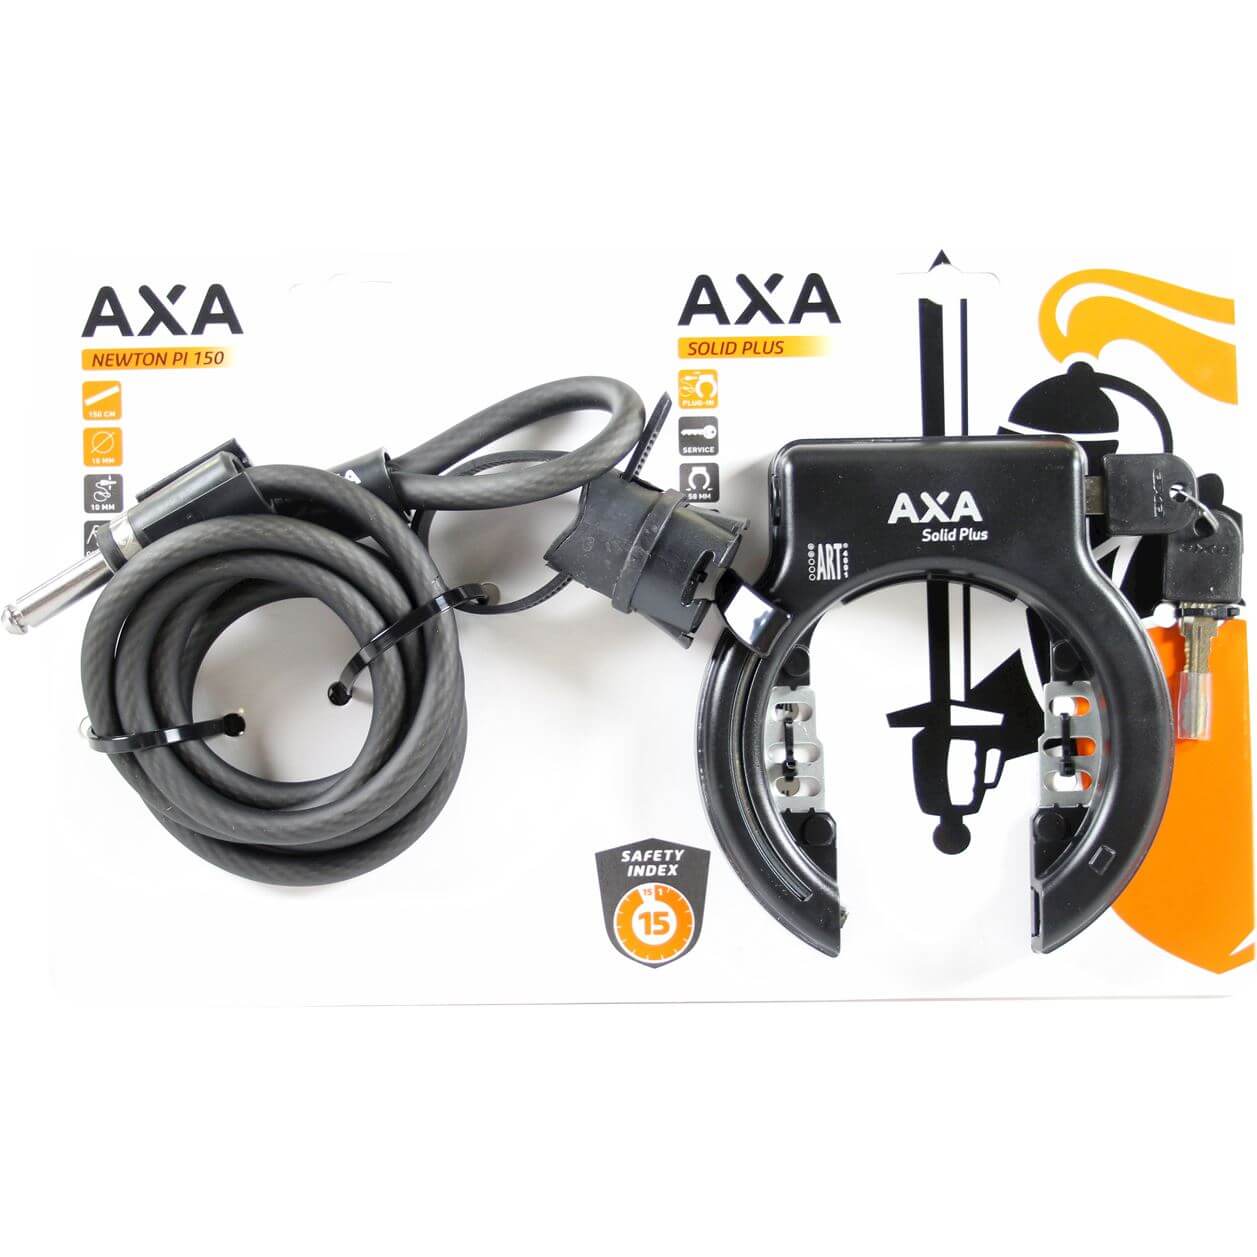 Axa slotenset Solid Plus + Plug-in PI150